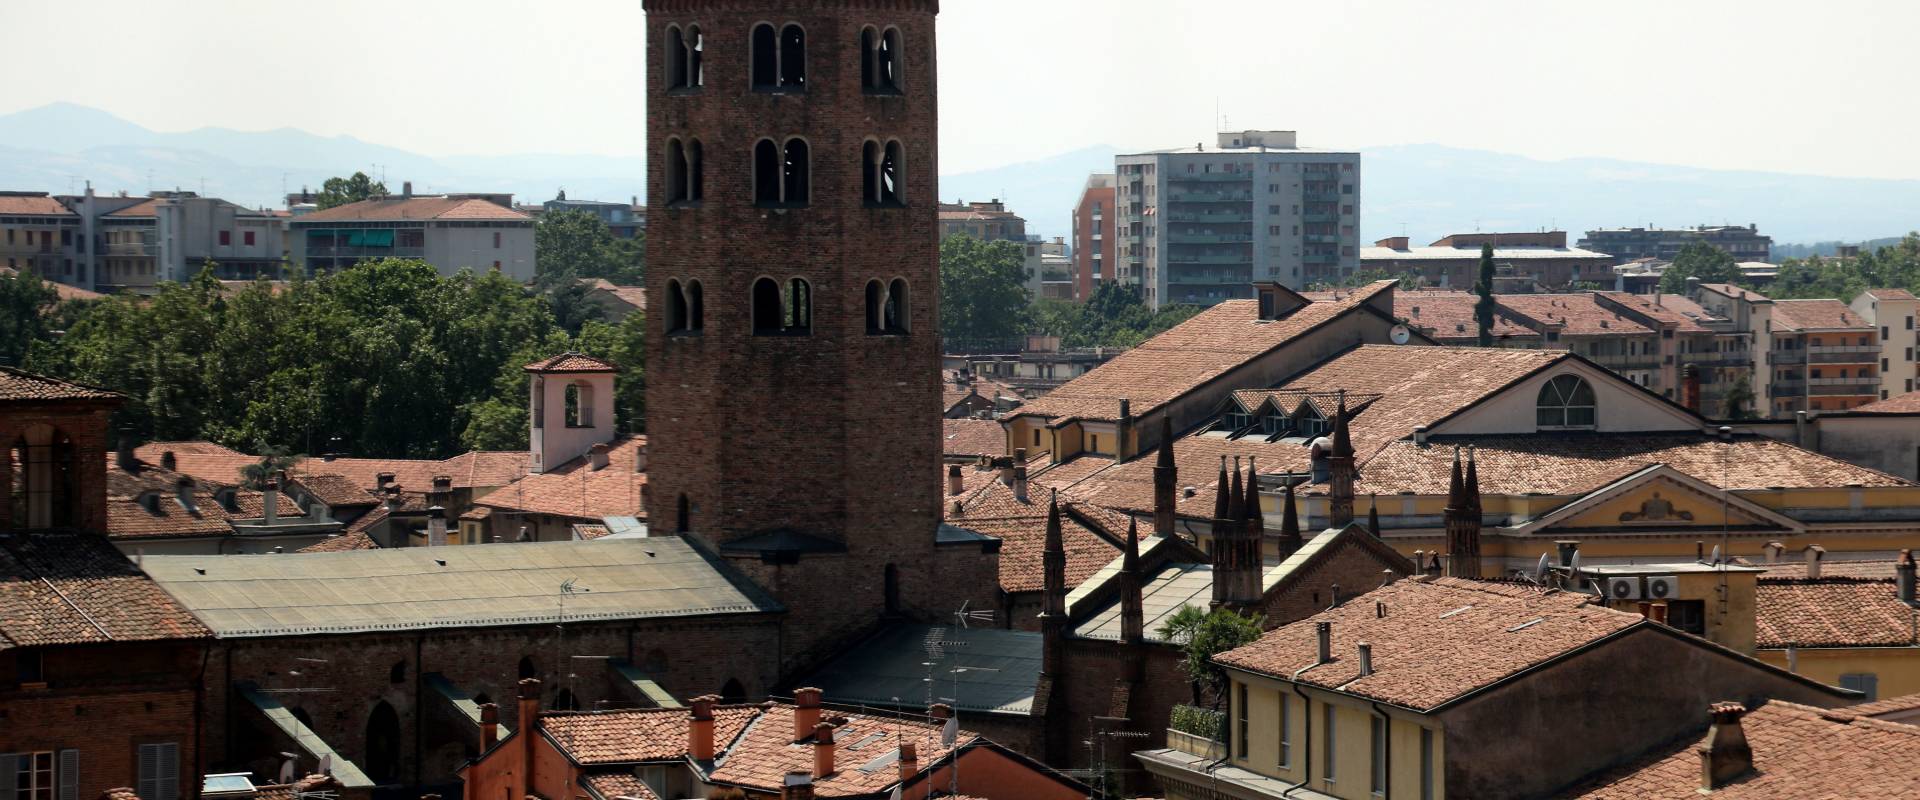 Basilica di Sant'Antonino (Piacenza), campanile 06 photo by Mongolo1984